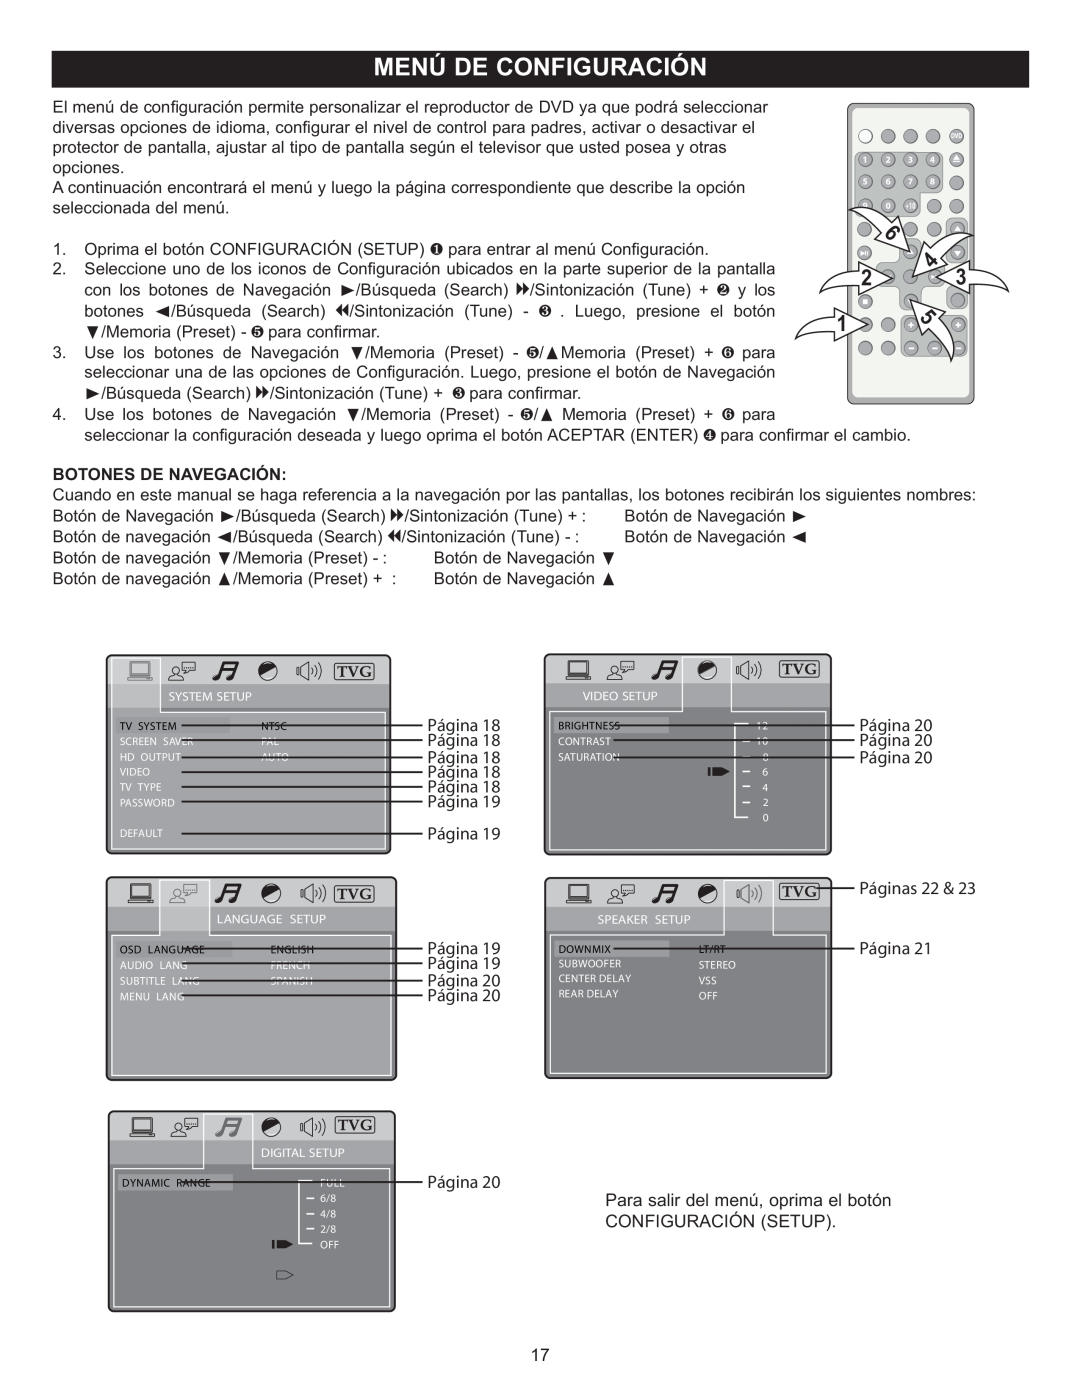 Memorex MIHT5005 manual Página Página Página Página Página Página Página, Páginas 22 